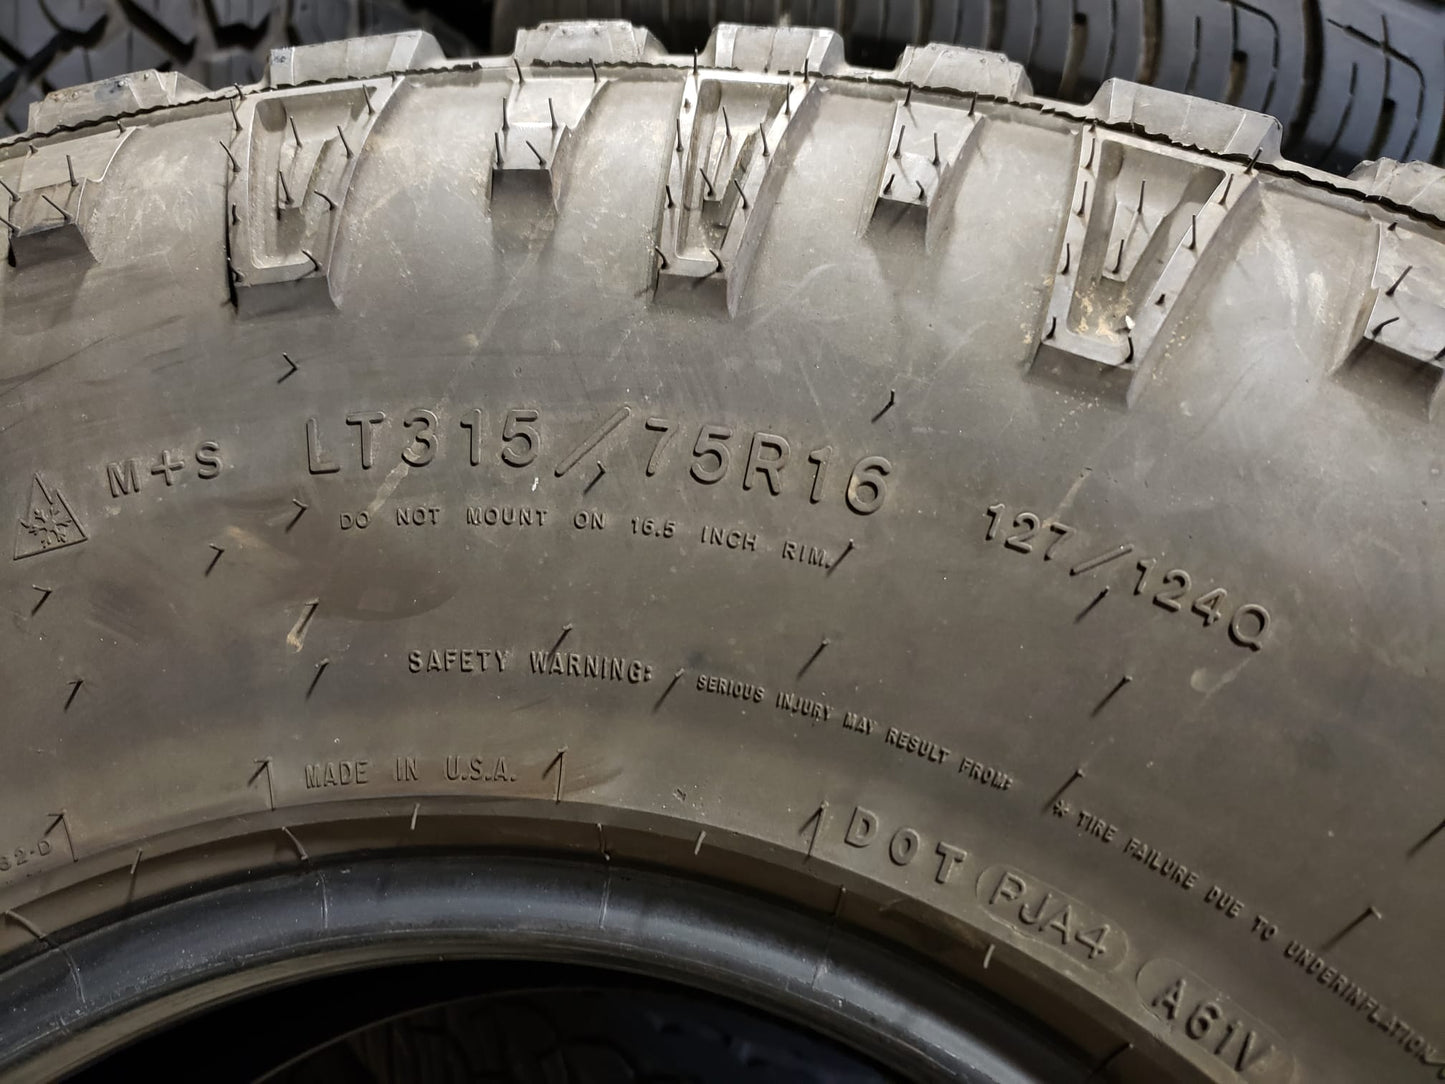 PAIR OF 315/75R16 Goodyear Wrangler Duratrac - Used Tires